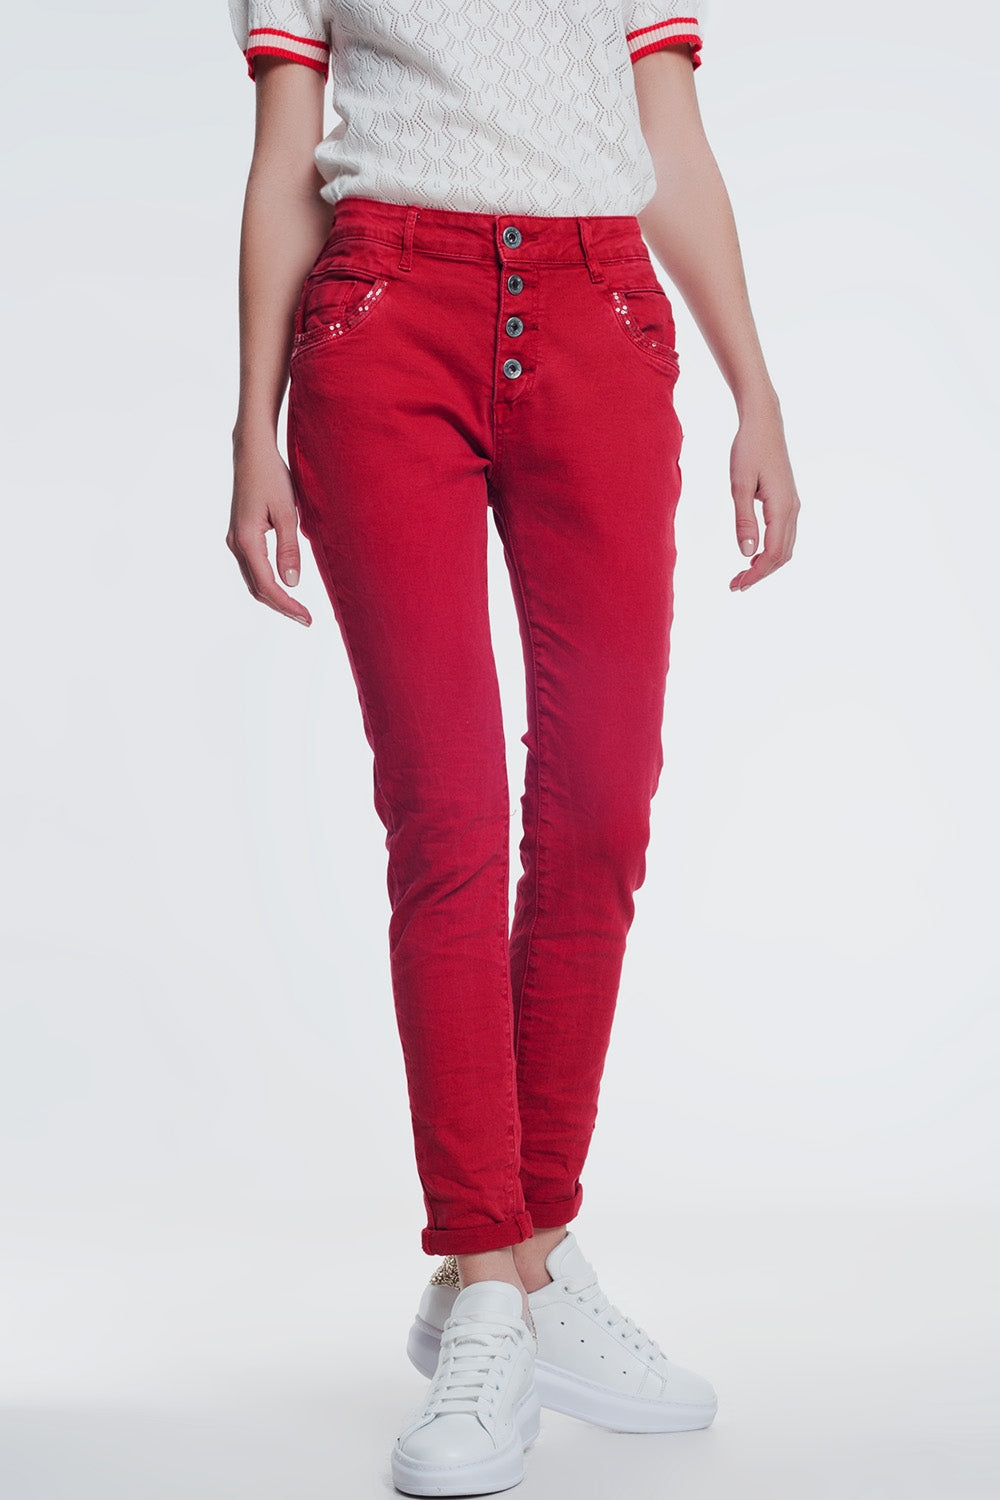 red boyfriend jeans with button closure Szua Store